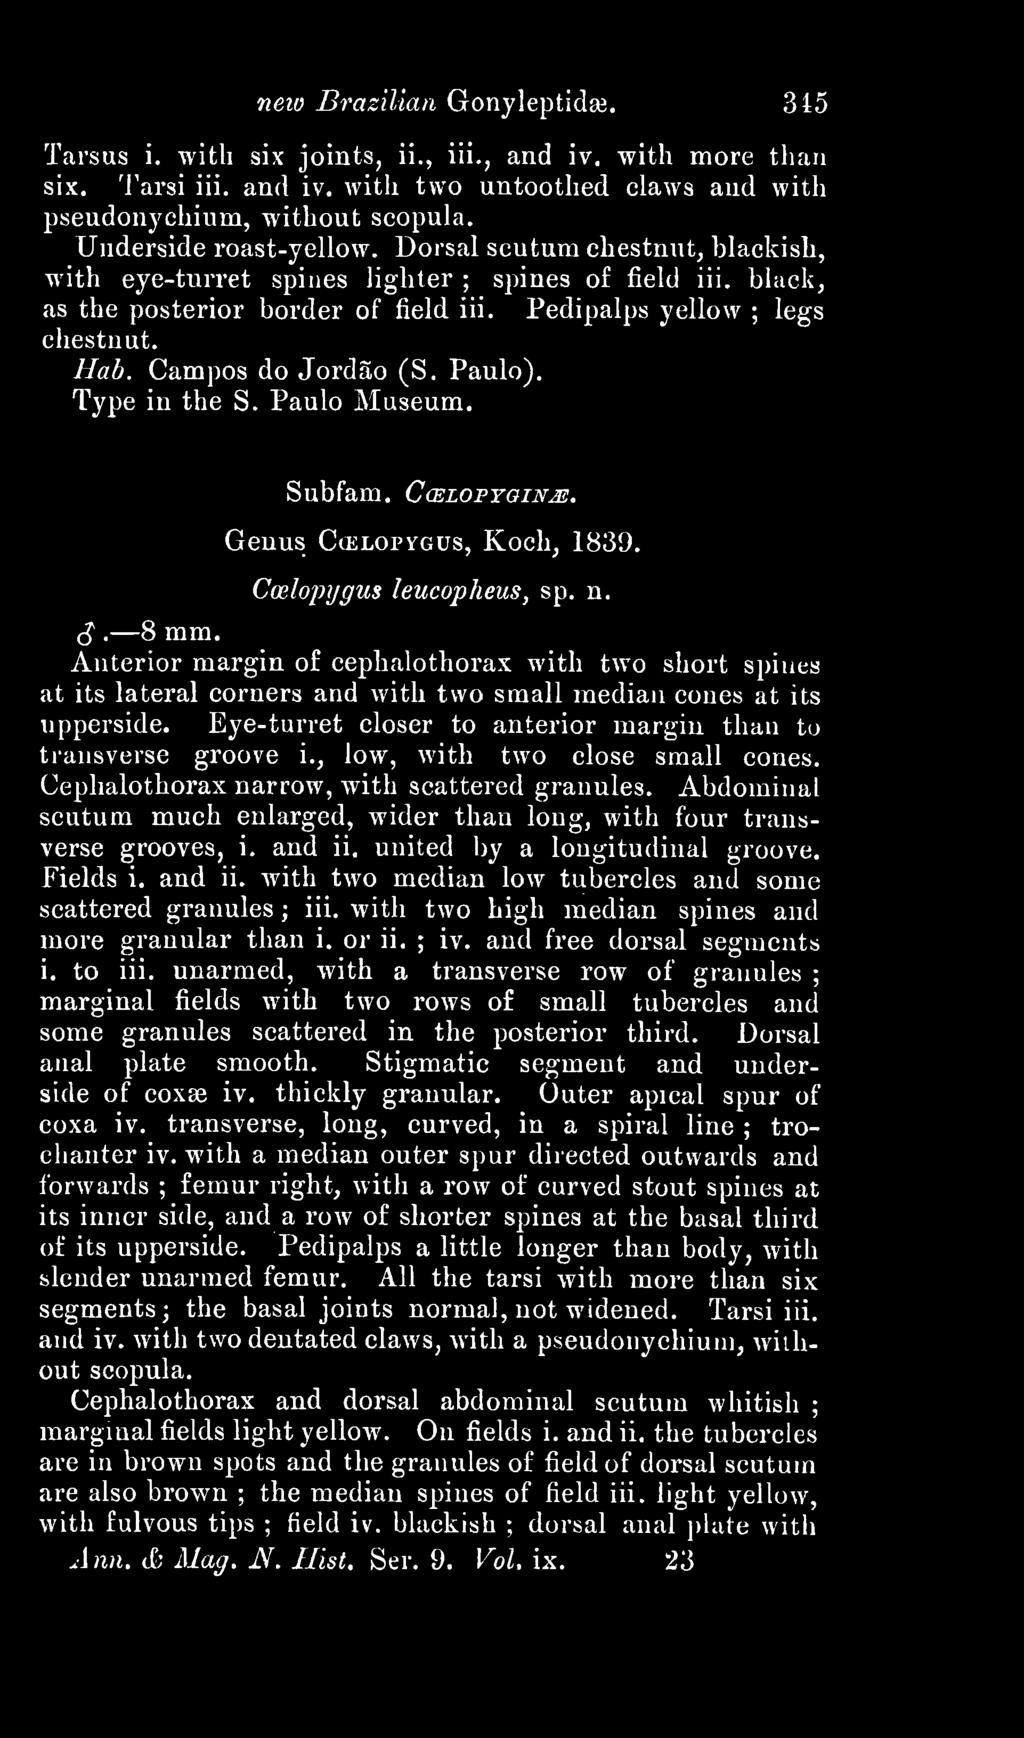 Campos do Jordao (S. Paulo). Subfam. CcELOPYaiNjs:. Genus Cu^lopvous, Koch, 1839. Cwlopygus leucopheus, sp. n. cj. 8 mm.